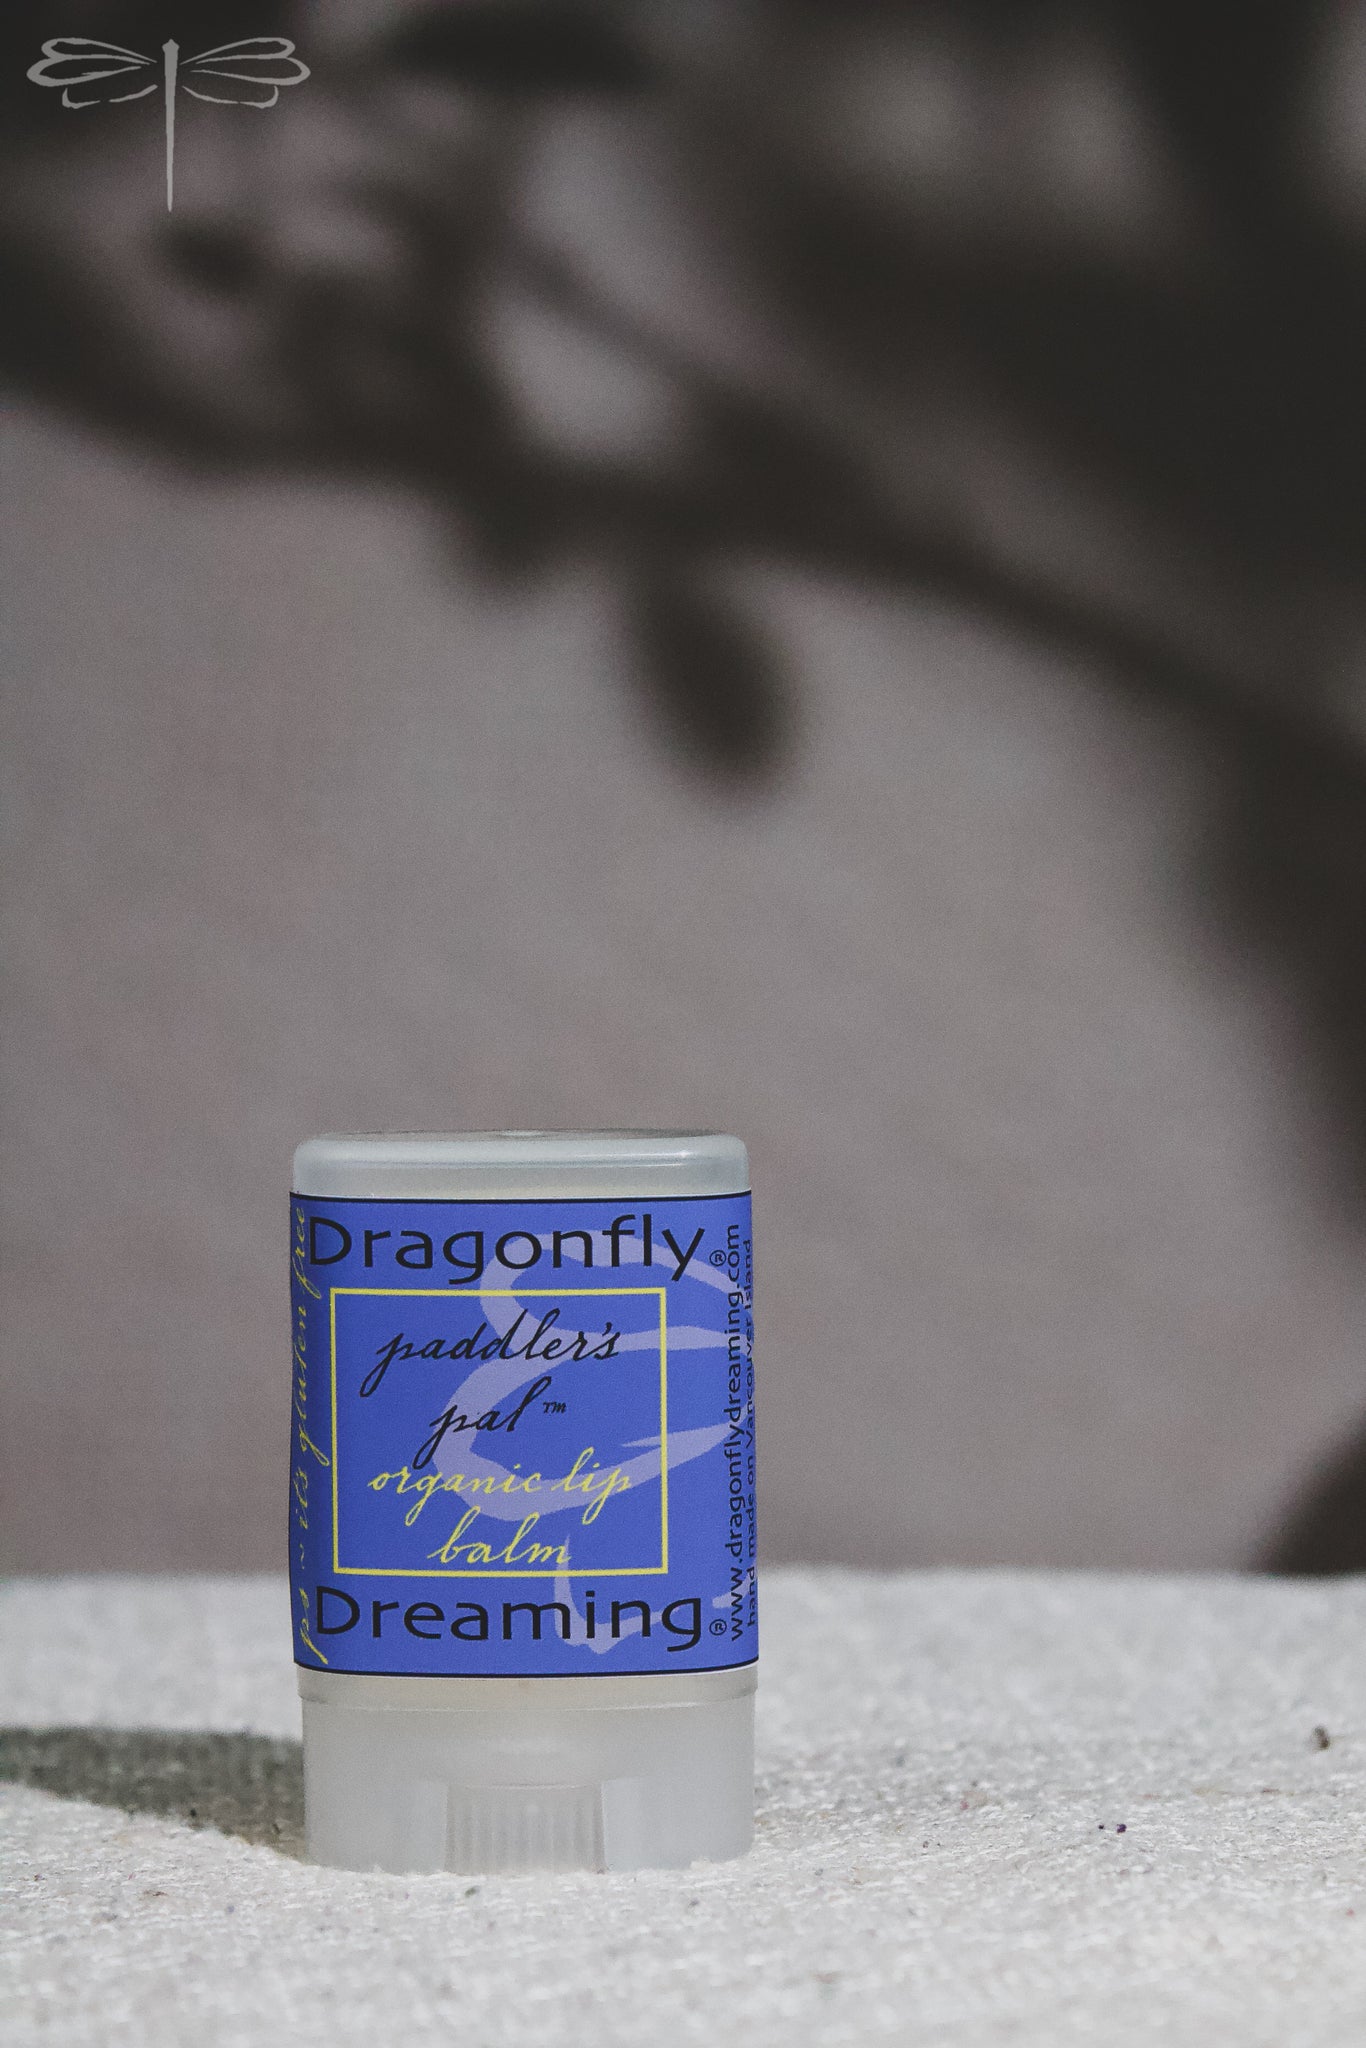 Paddler's Pal Organic Lip Balm by Dragonfly Dreaming Organics